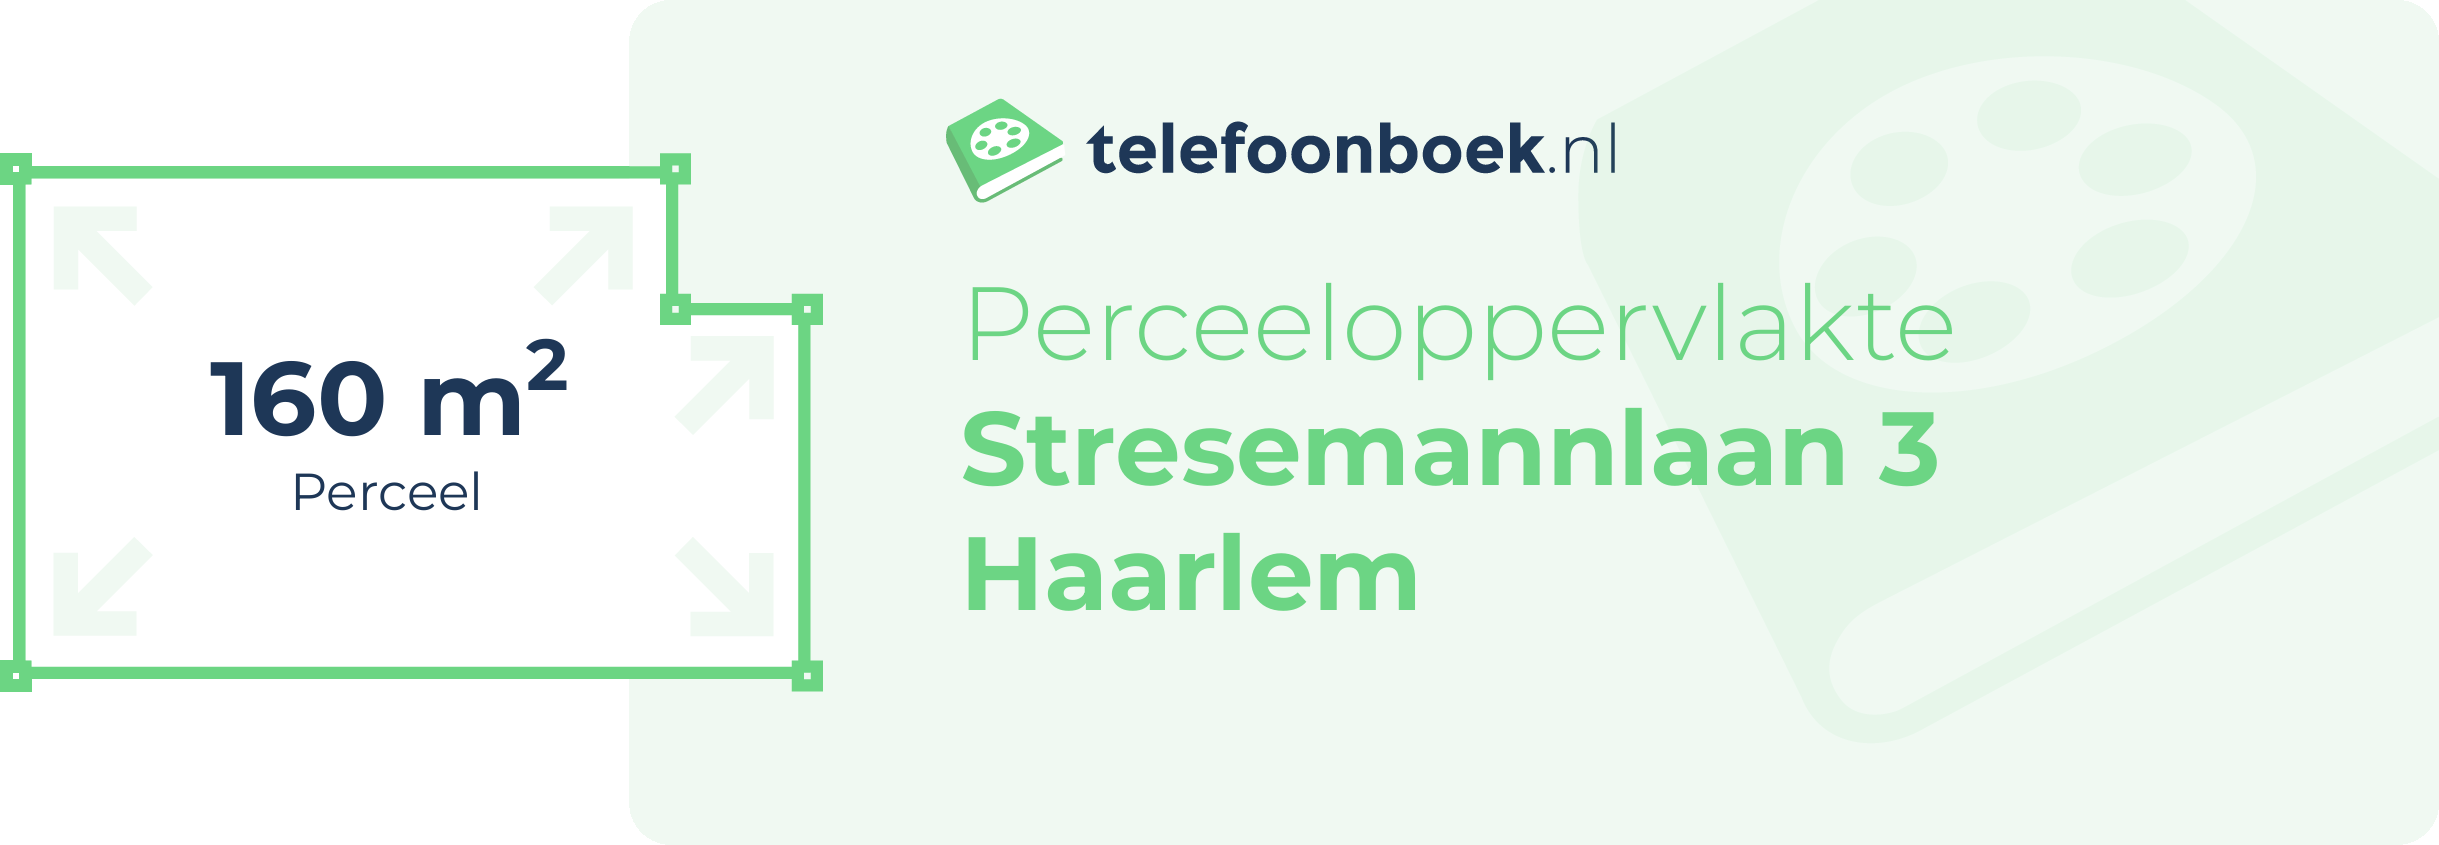 Perceeloppervlakte Stresemannlaan 3 Haarlem